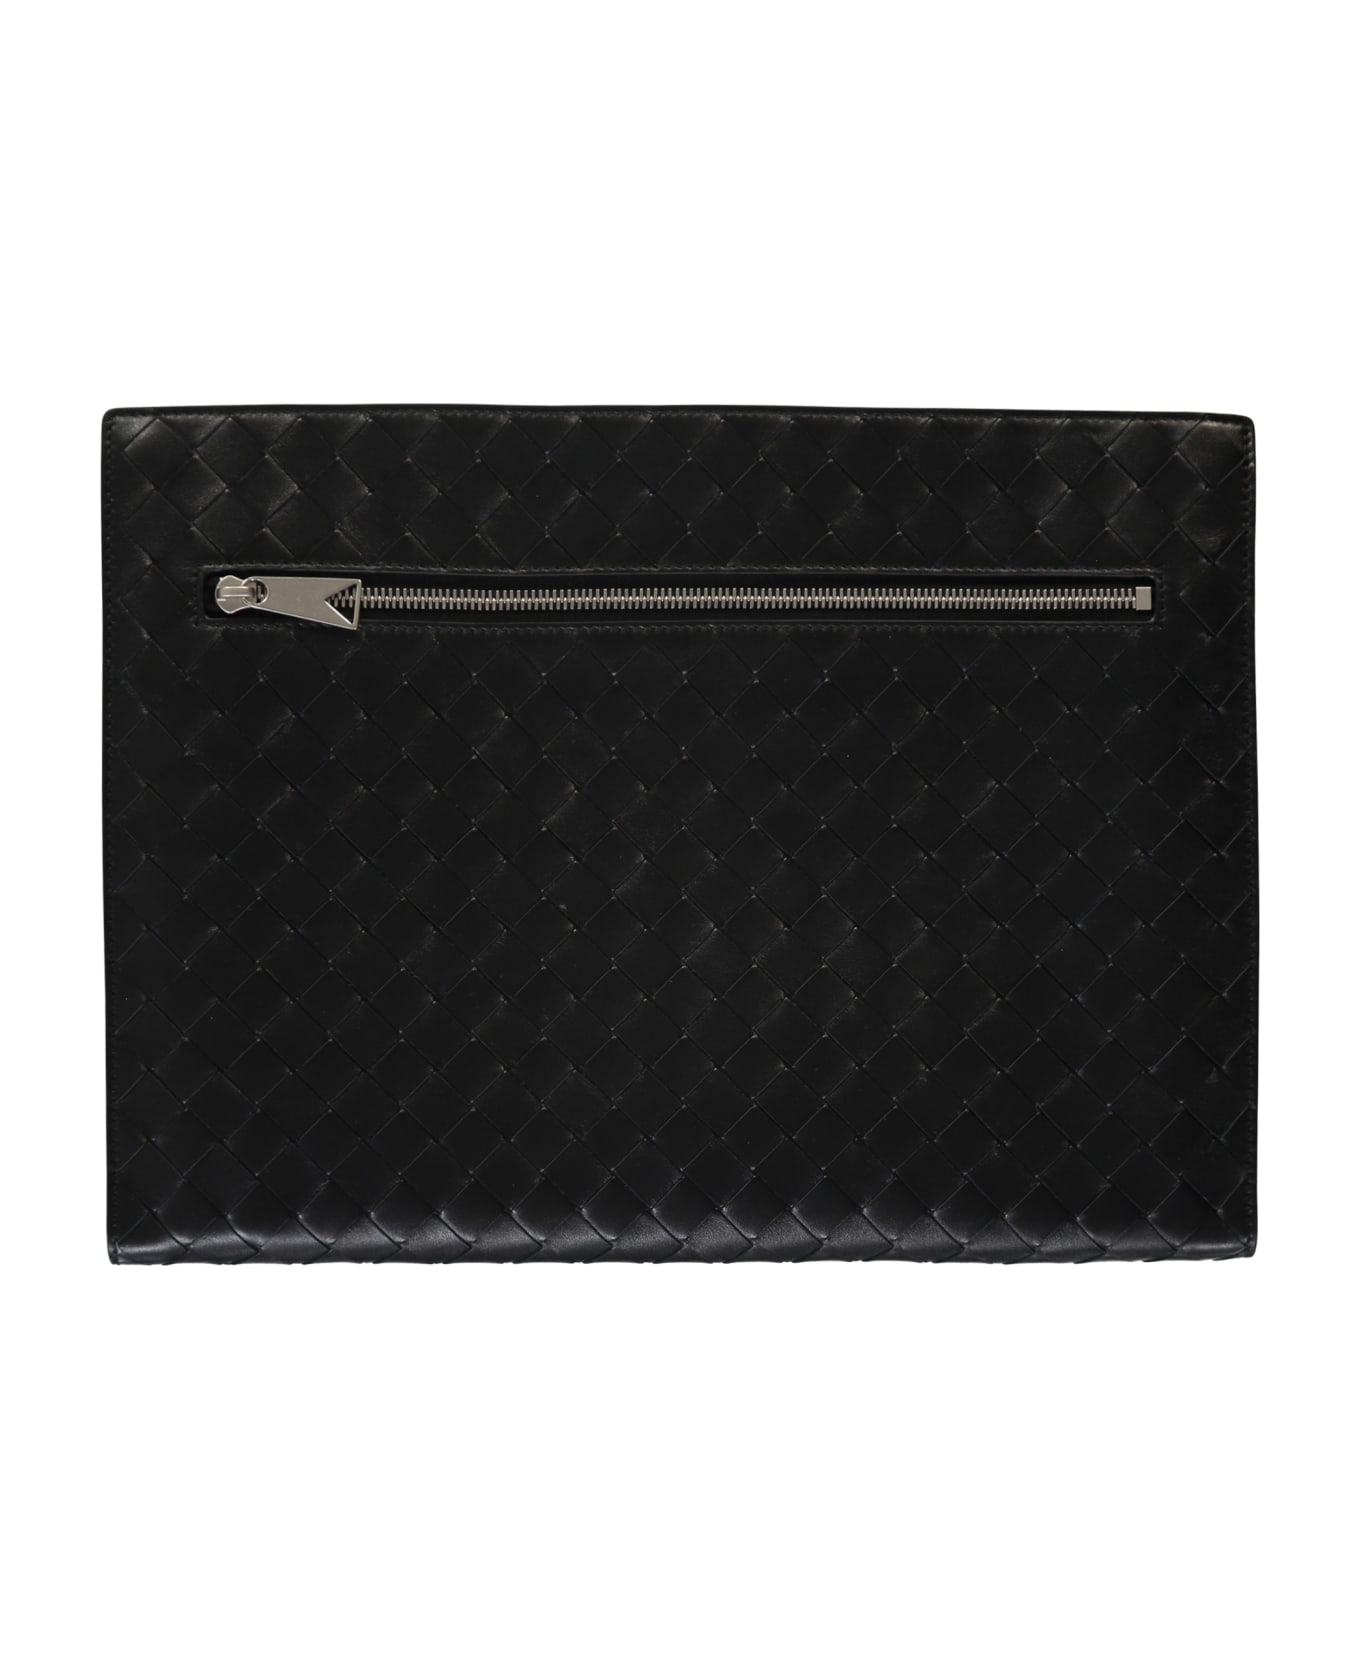 Bottega Veneta Leather Briefcase - black バッグ